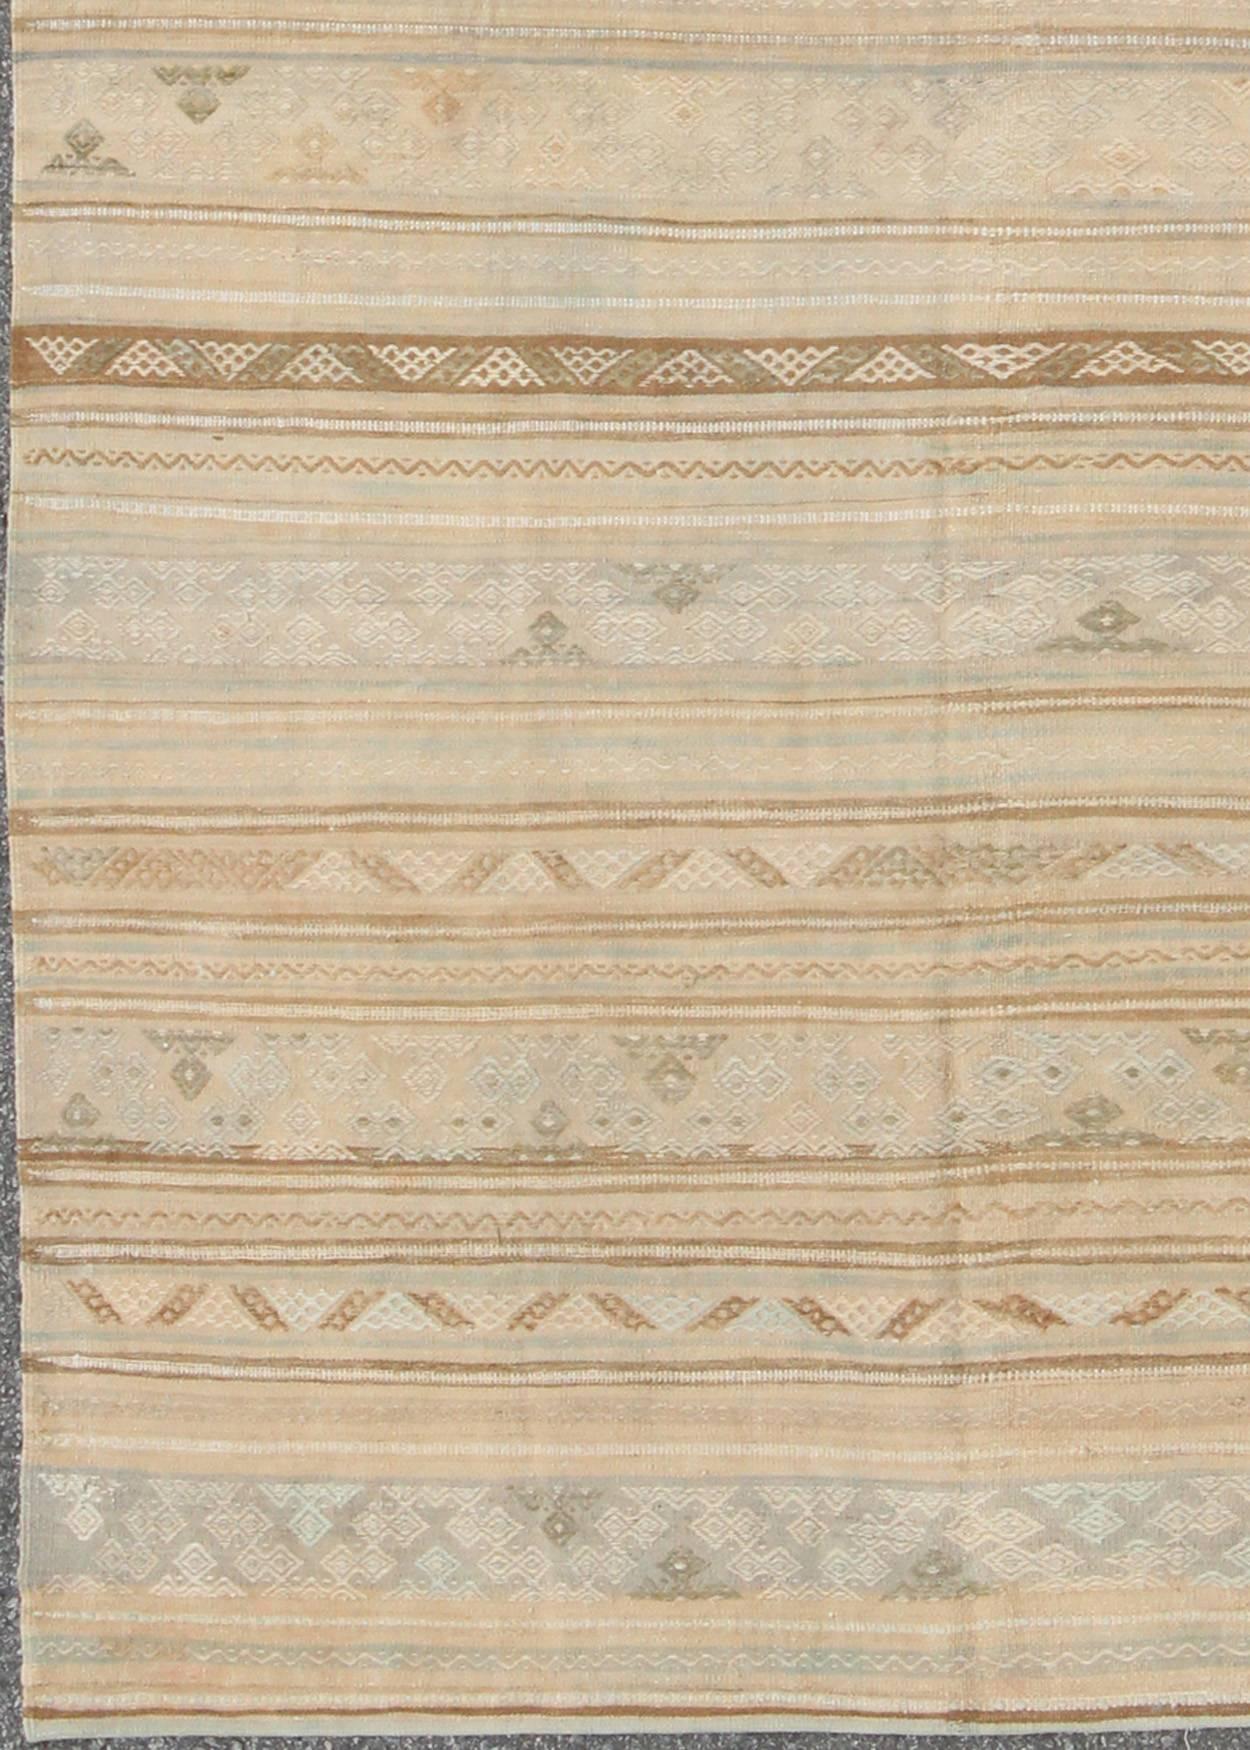 Neutral stripes vintage Turkish Kilim rug with assorted geometric tribal shapes, rug en-141092, country of origin / type: turkey / Kilim, circa mid-20th century

Featuring geometric tribal shapes rendered in a repeating horizontal stripe design,